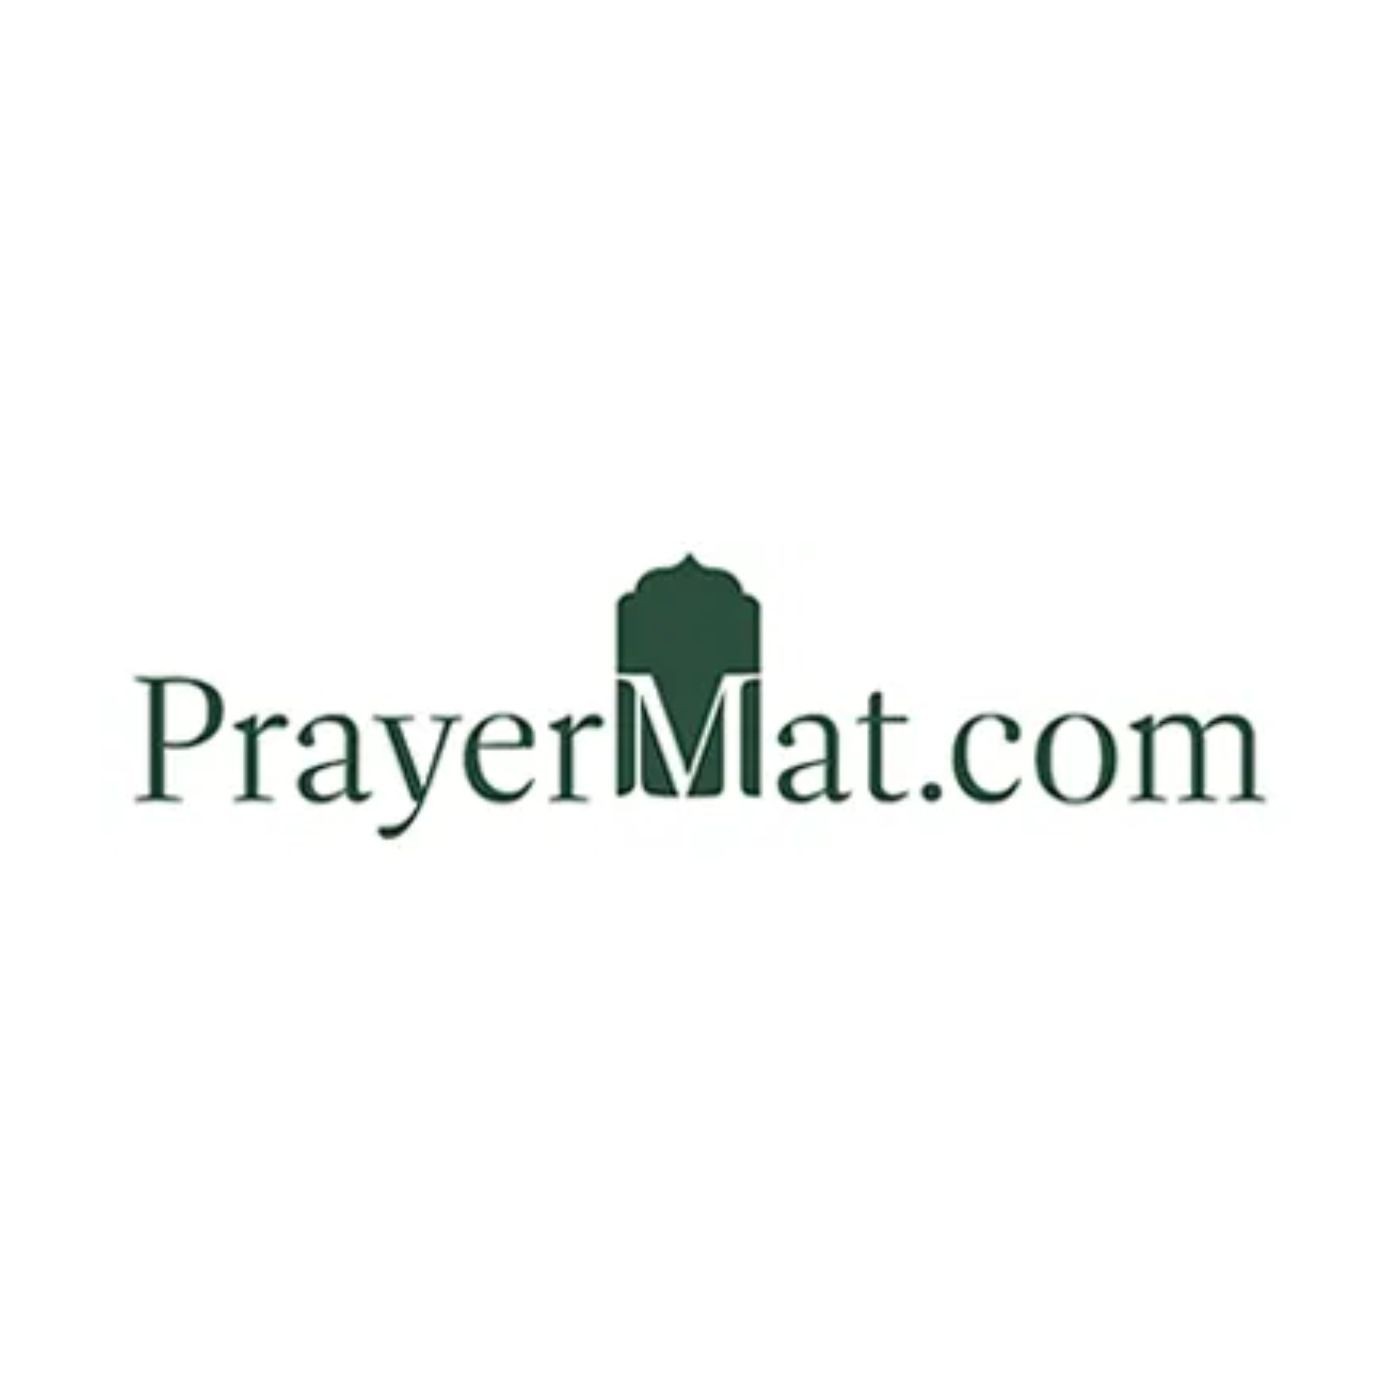 PrayerMat